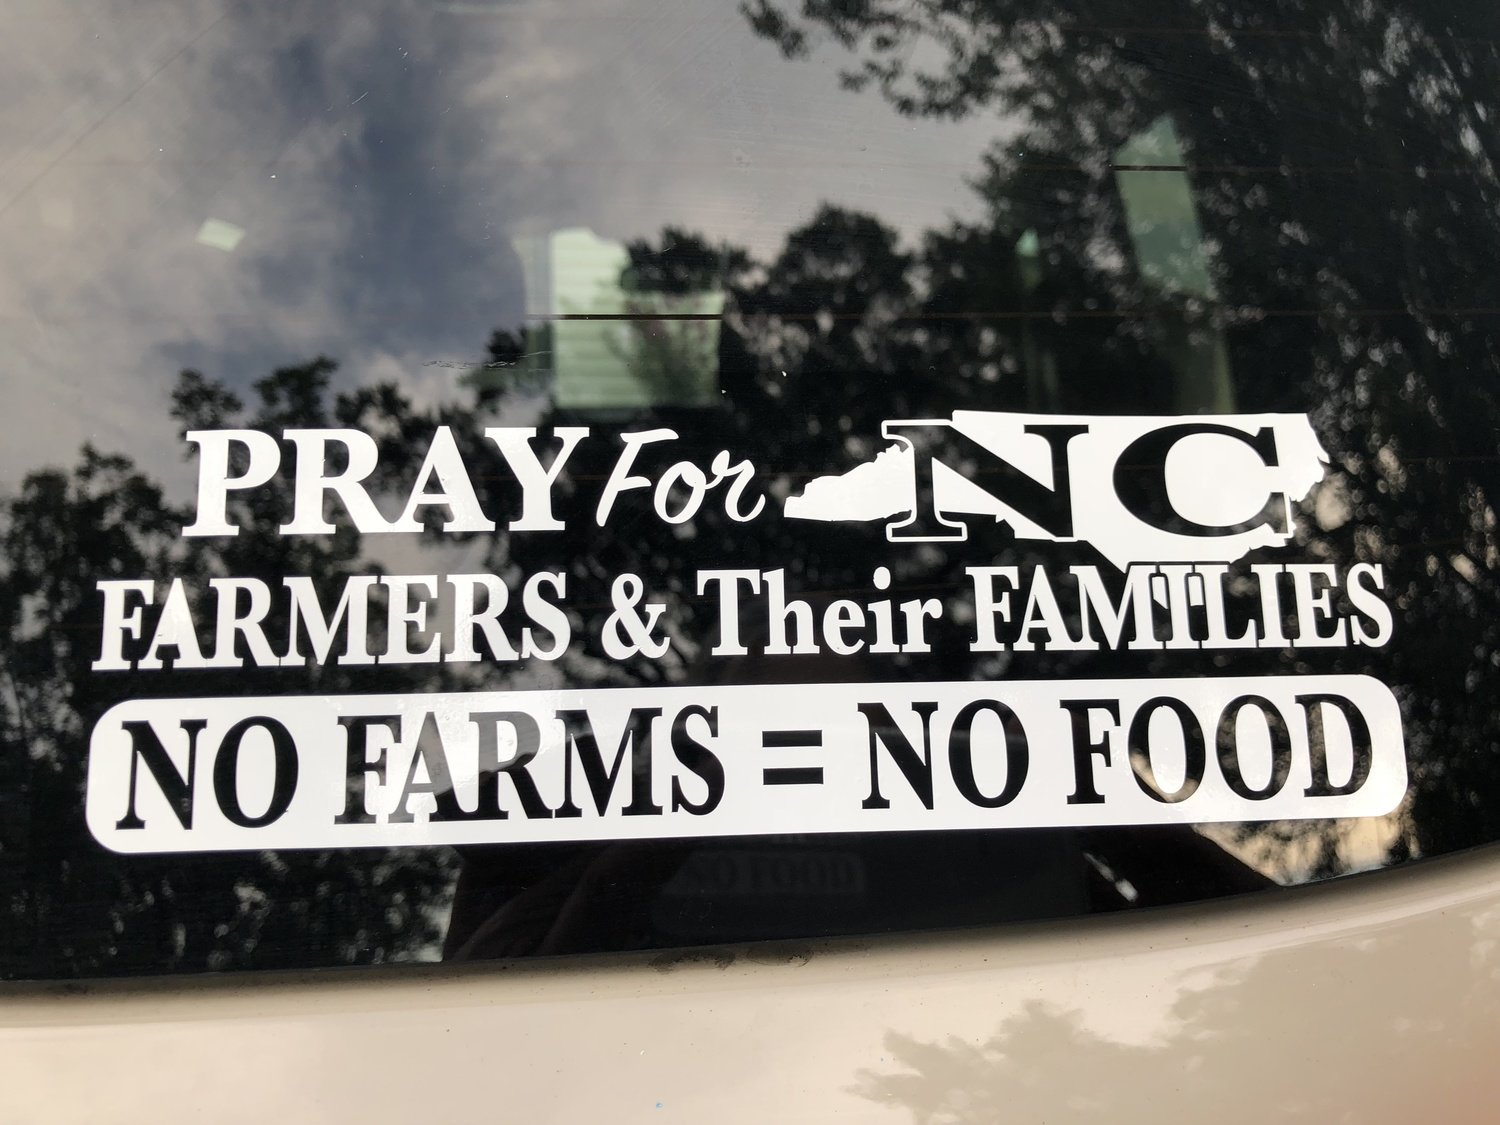 PRAY for NC FARMERS - WINDOW DECAL